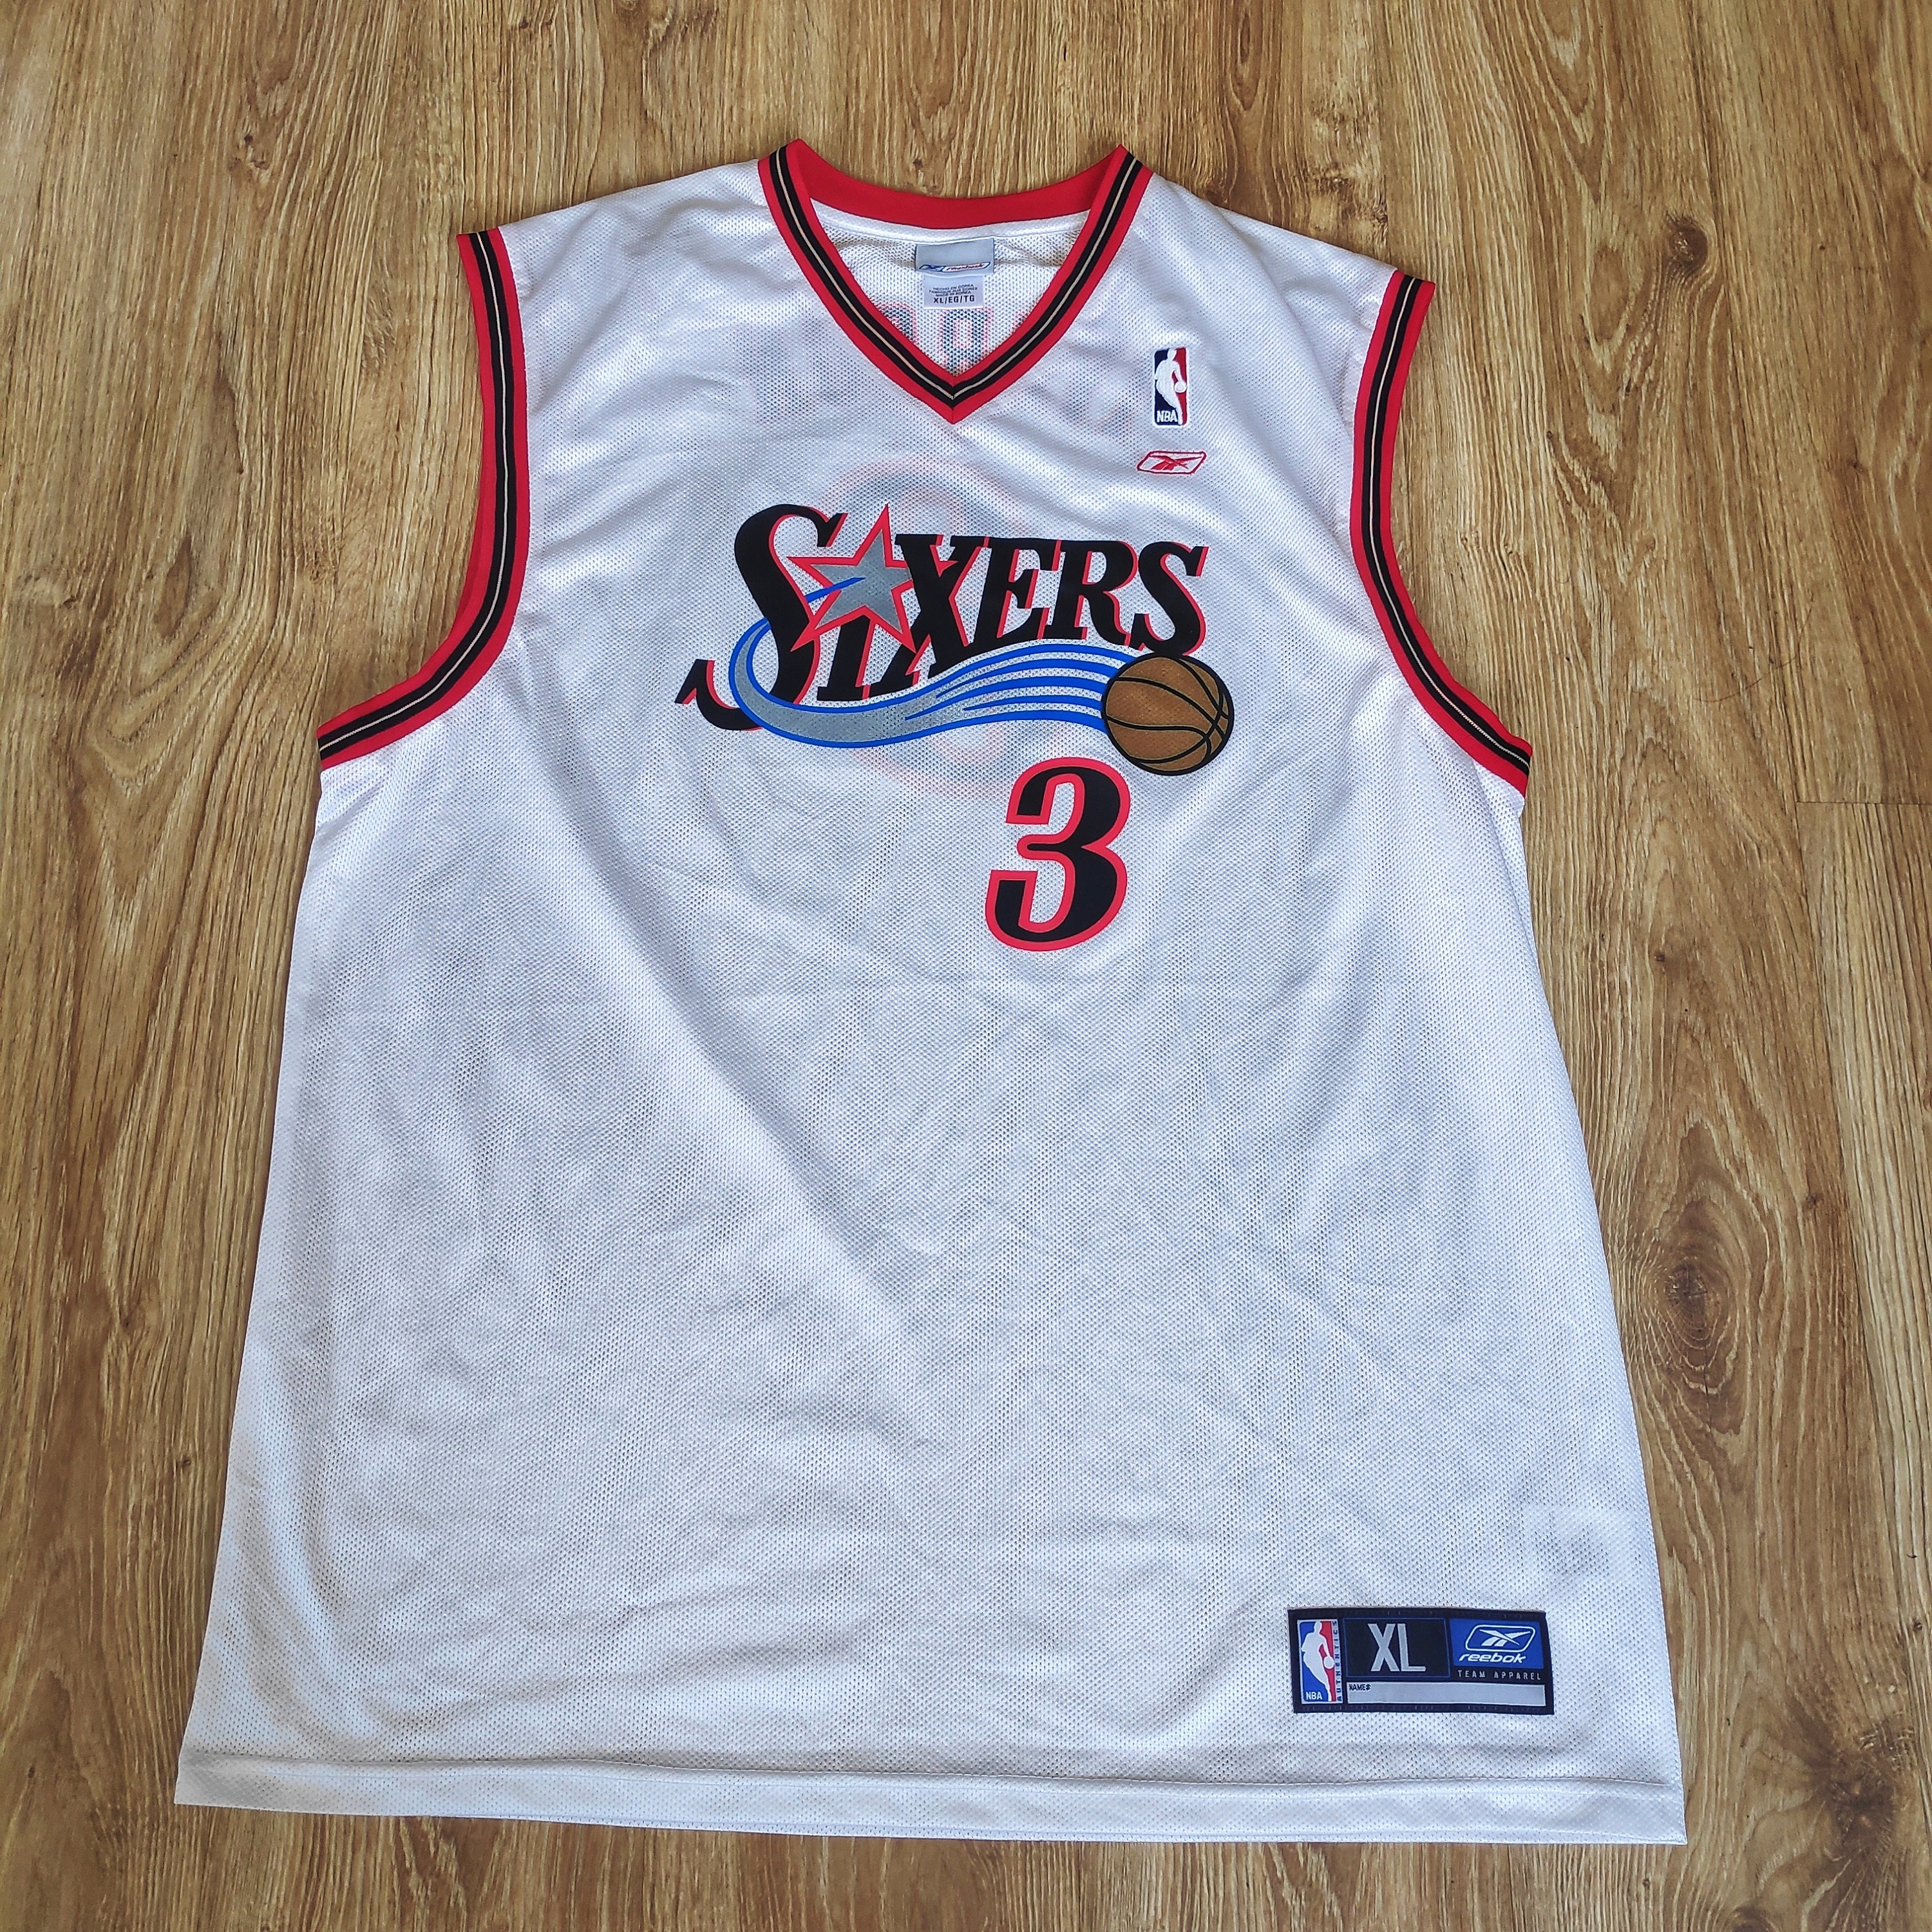 Vintage Reebok NBA Philadelphia 76ers Allen Iverson #3 Jersey Size Youth XL.